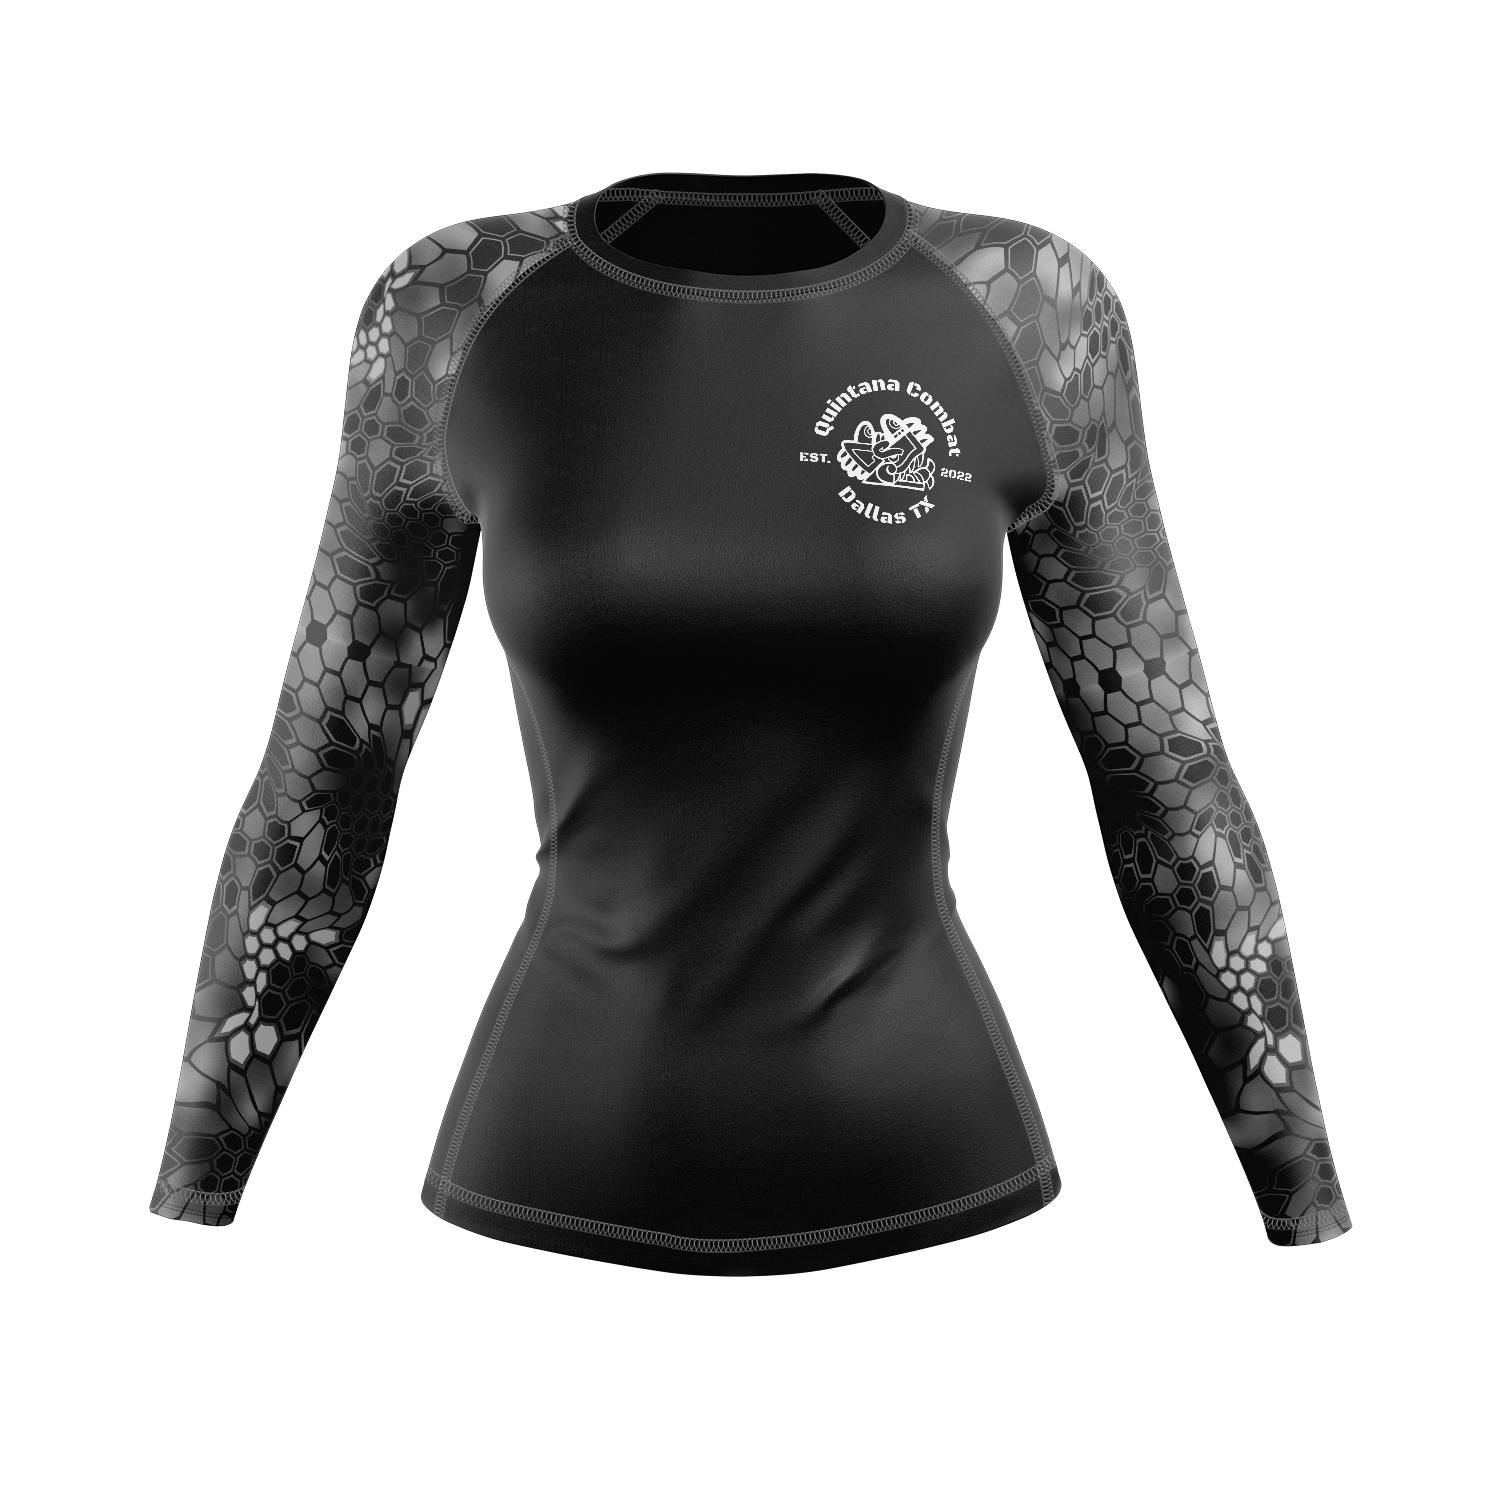 Quintana Combat & Fitness women's rash guard Standard Issue, black and grey